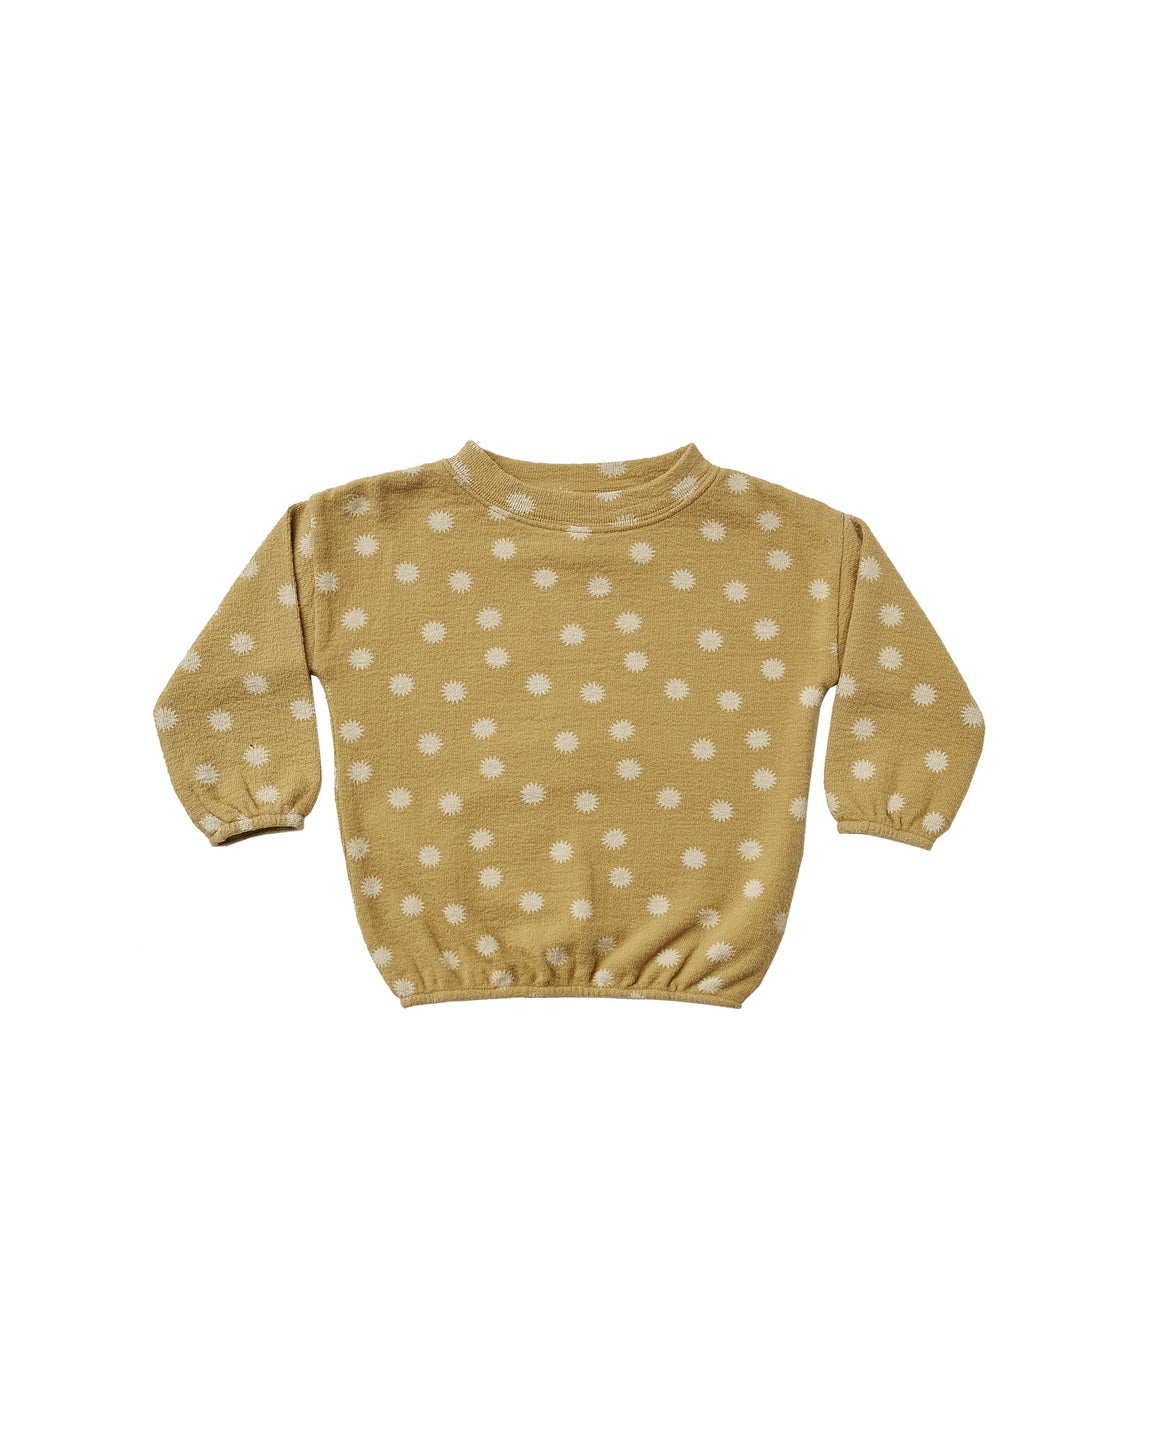 Sunburst Slouchy Pullover - Gold